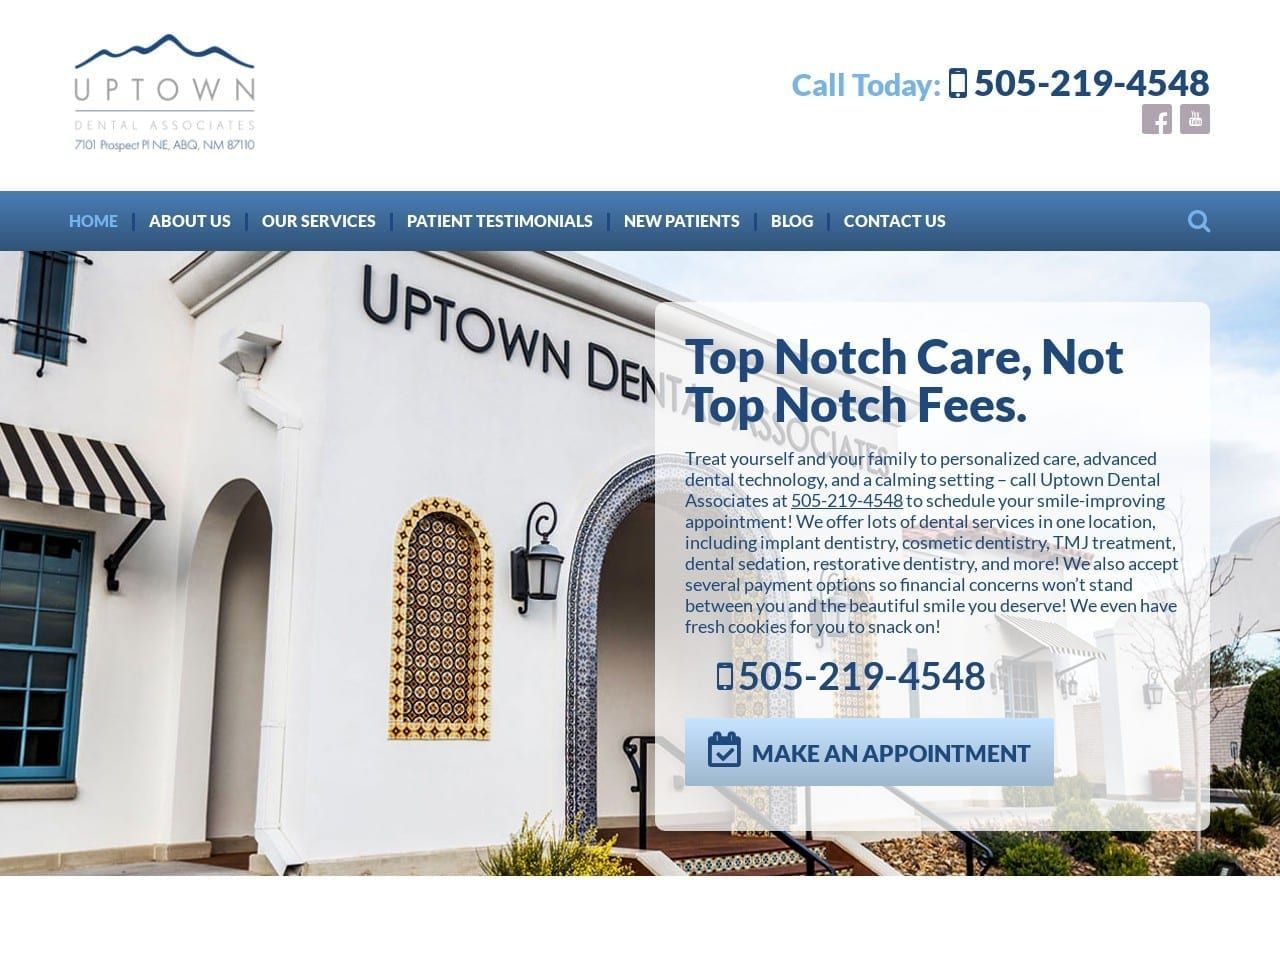 Uptown Dental Associates Website Screenshot from uptowndentalassociates.com